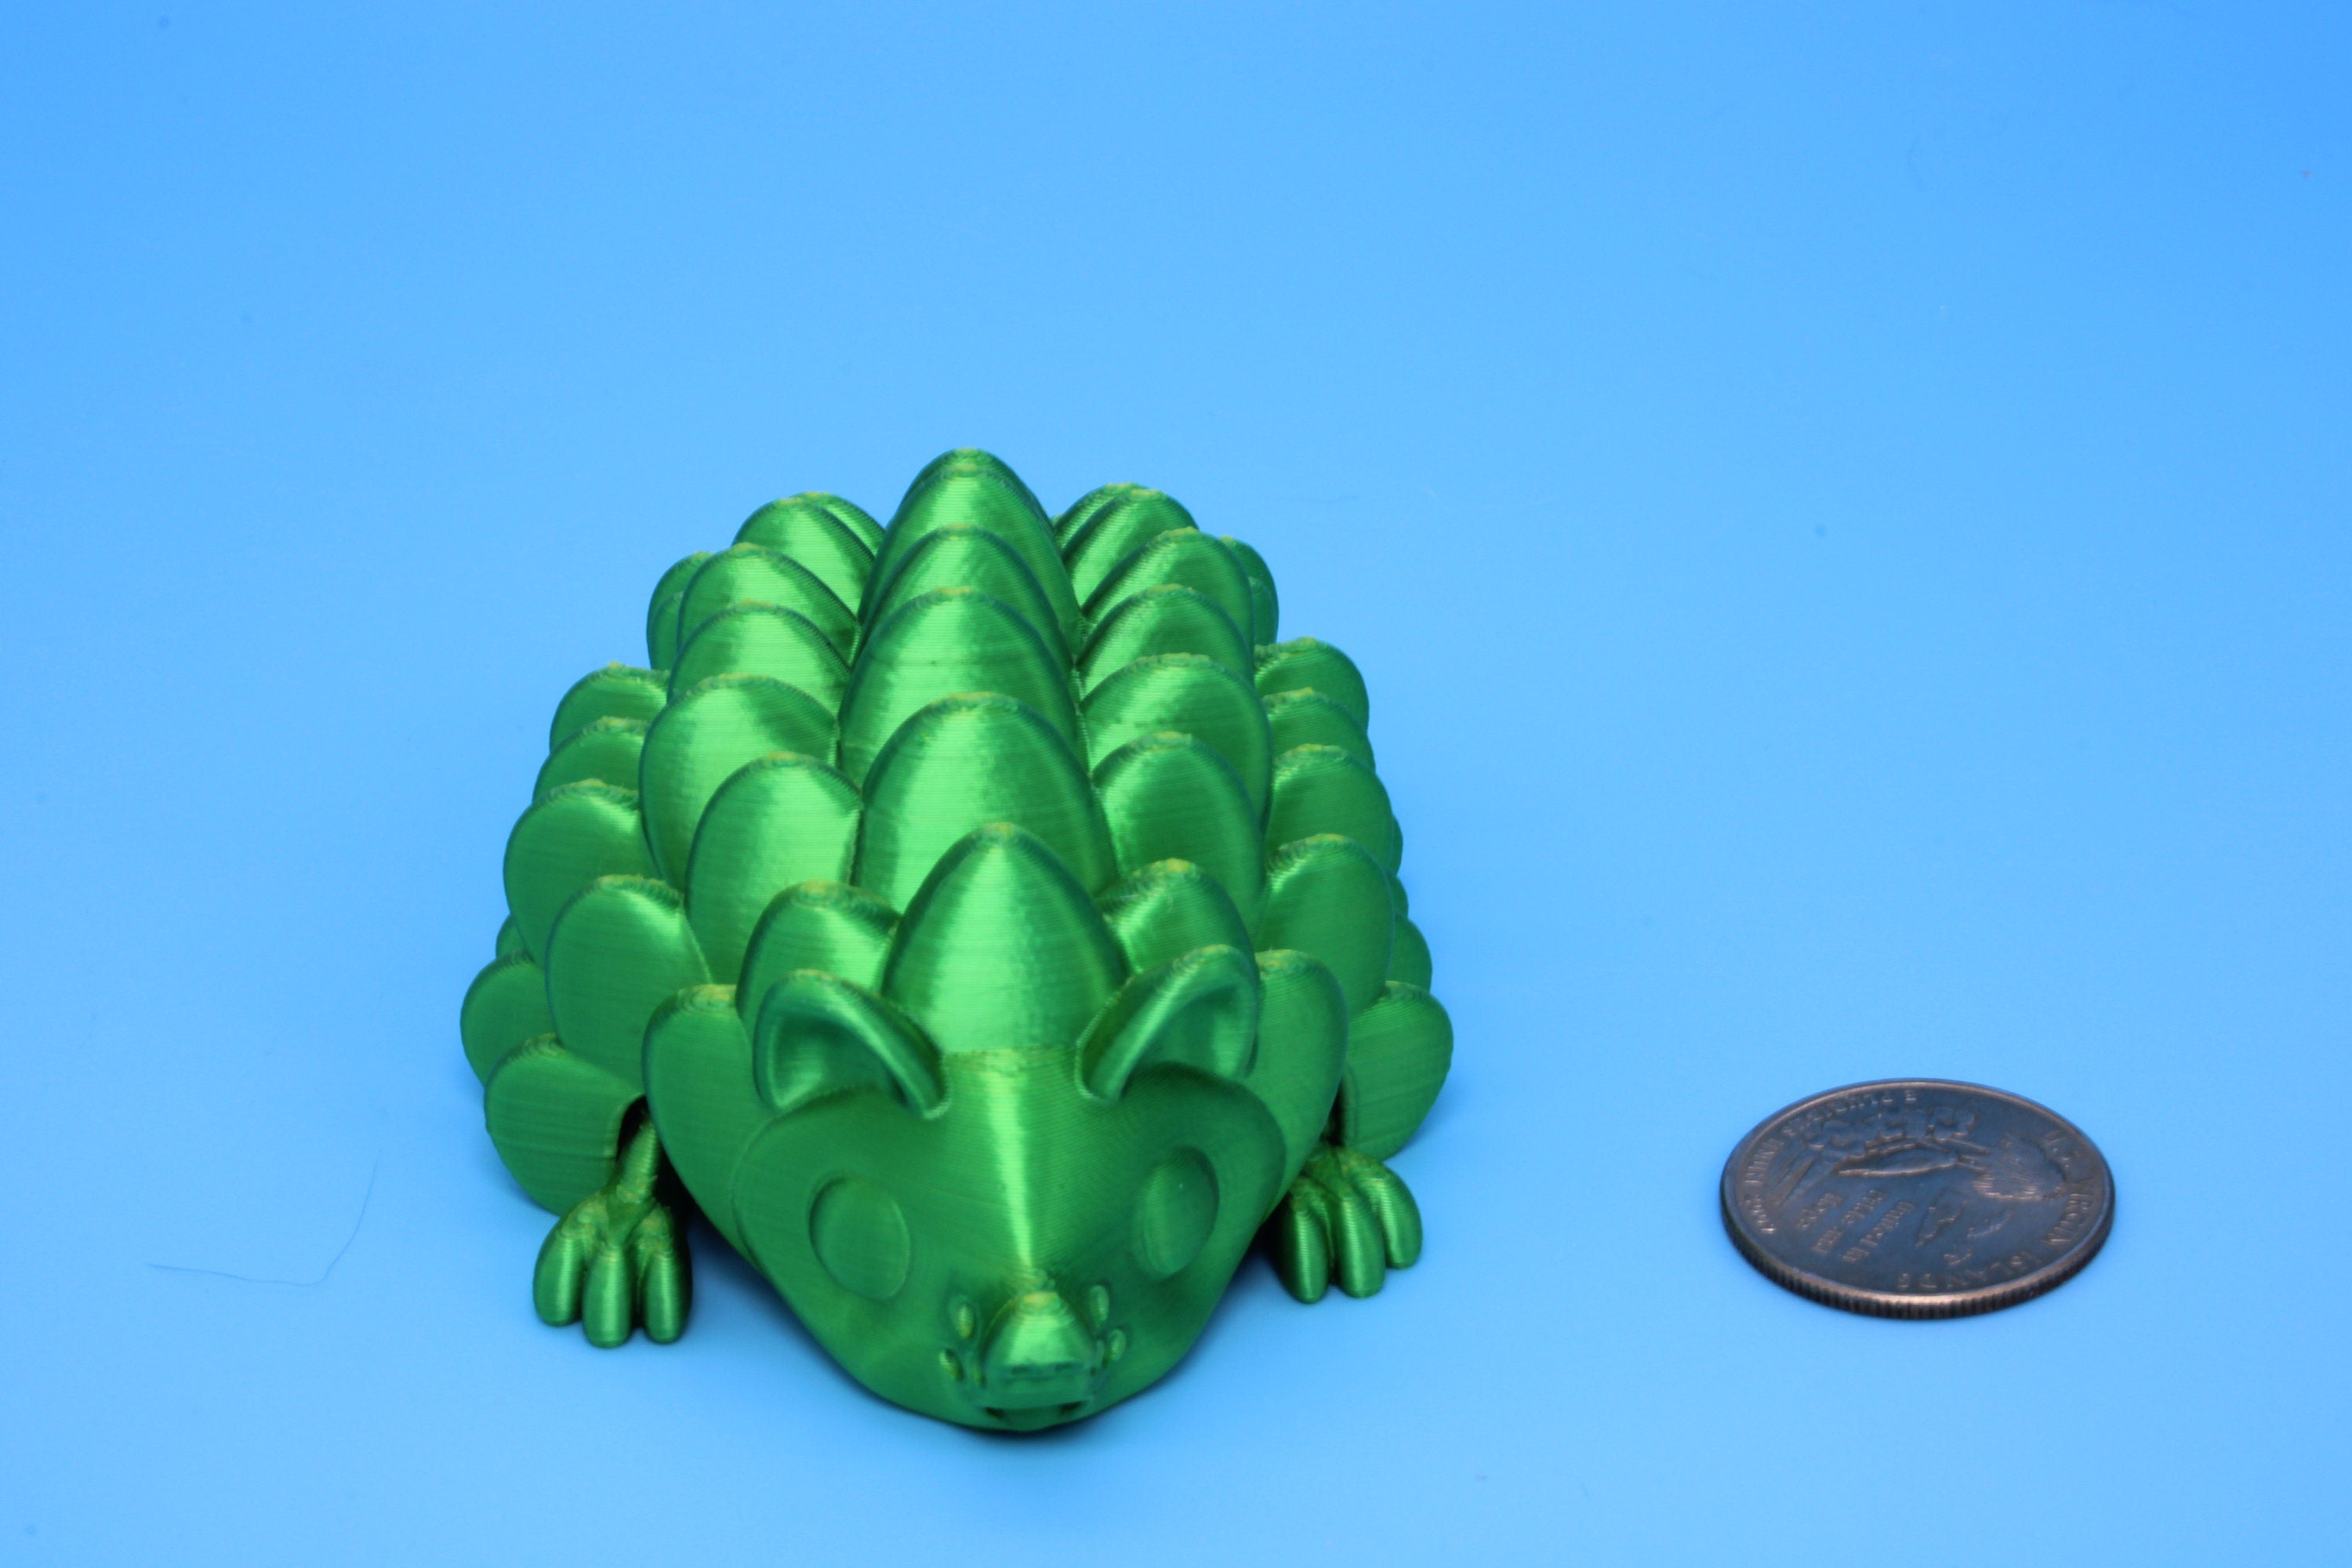 Hedgehog- Green & Yellow | 3D Printed | Small Cute Hedgehog | Sensory Toy | Fidget Toy.